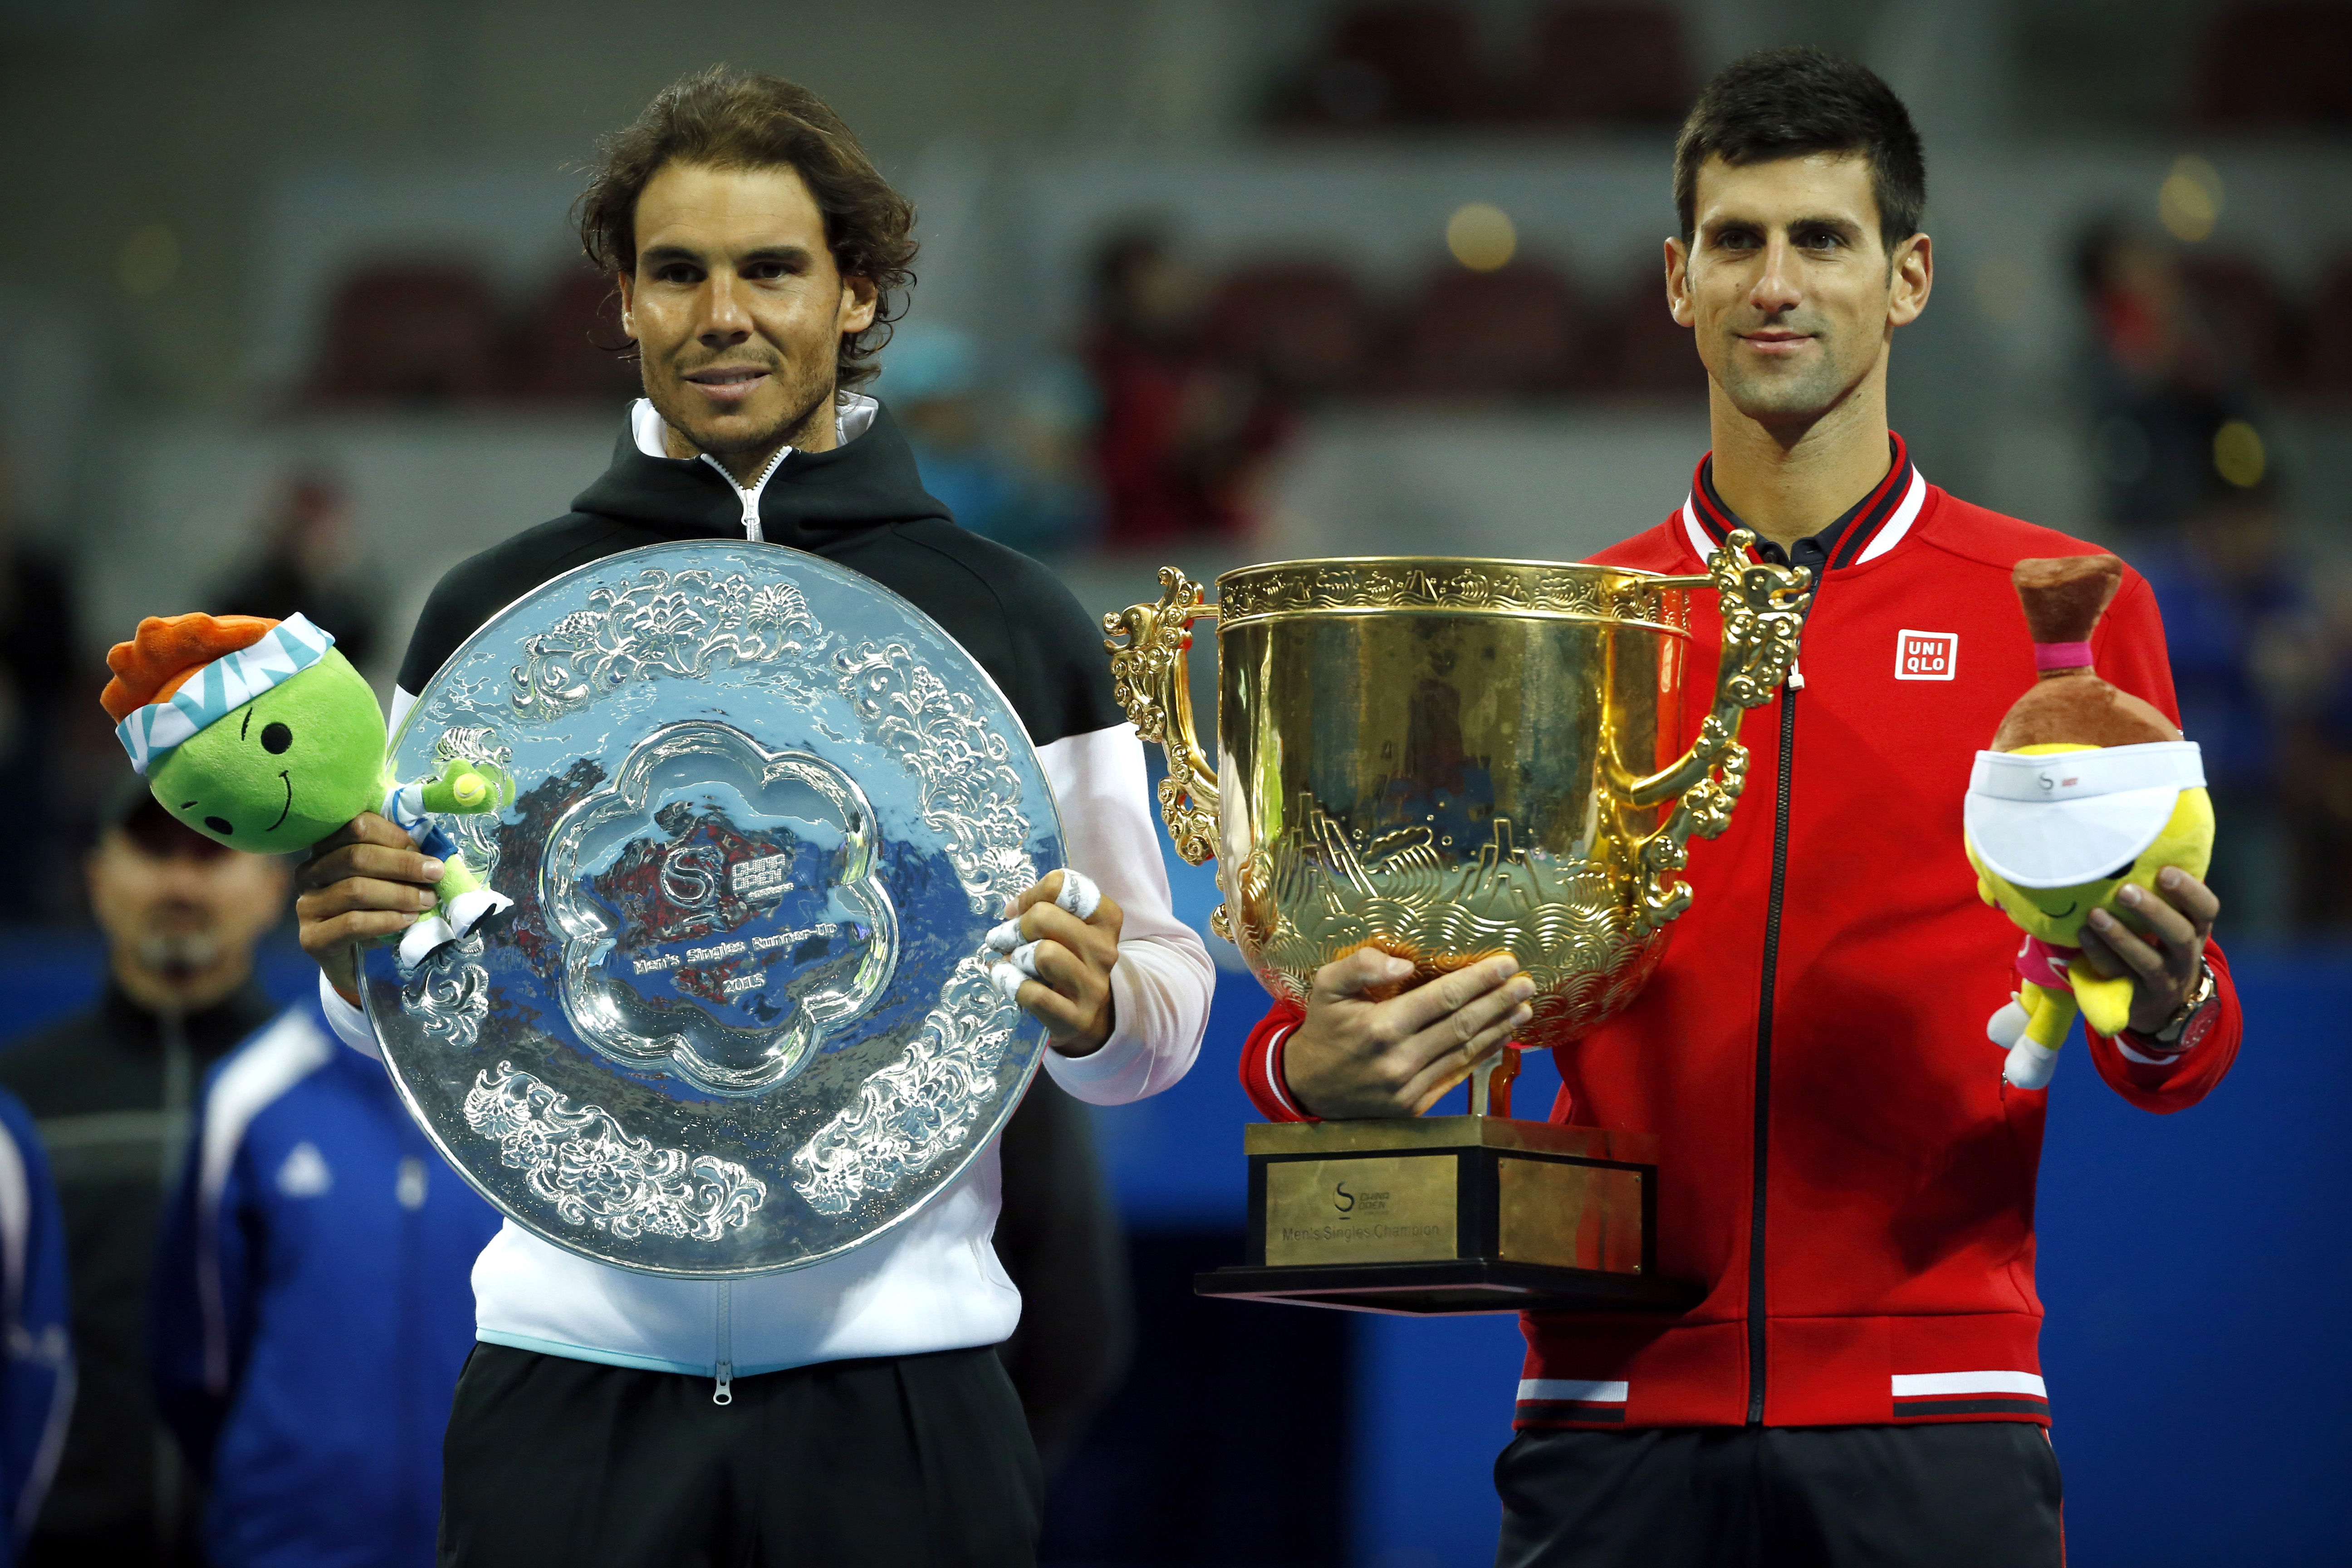 Rafael Nadal loses China Open final to Novak Djokovic [PHOTOS] – Rafael Nadal Fans